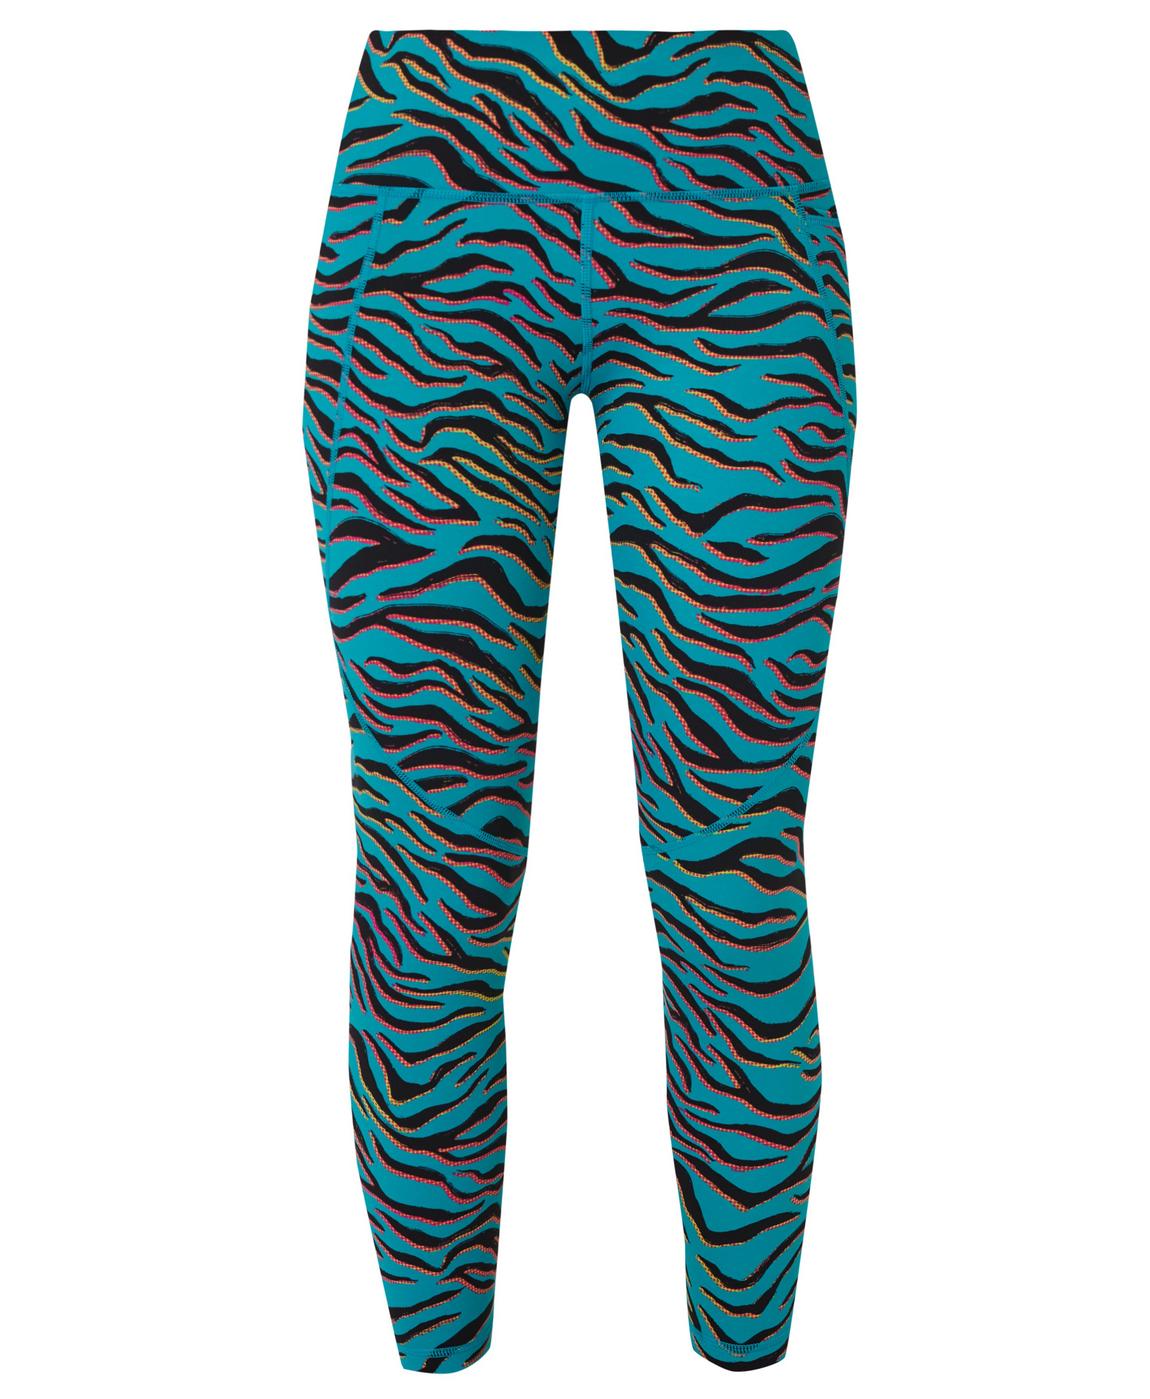 Power Workout Leggings - Blue Gradient Tiger Print